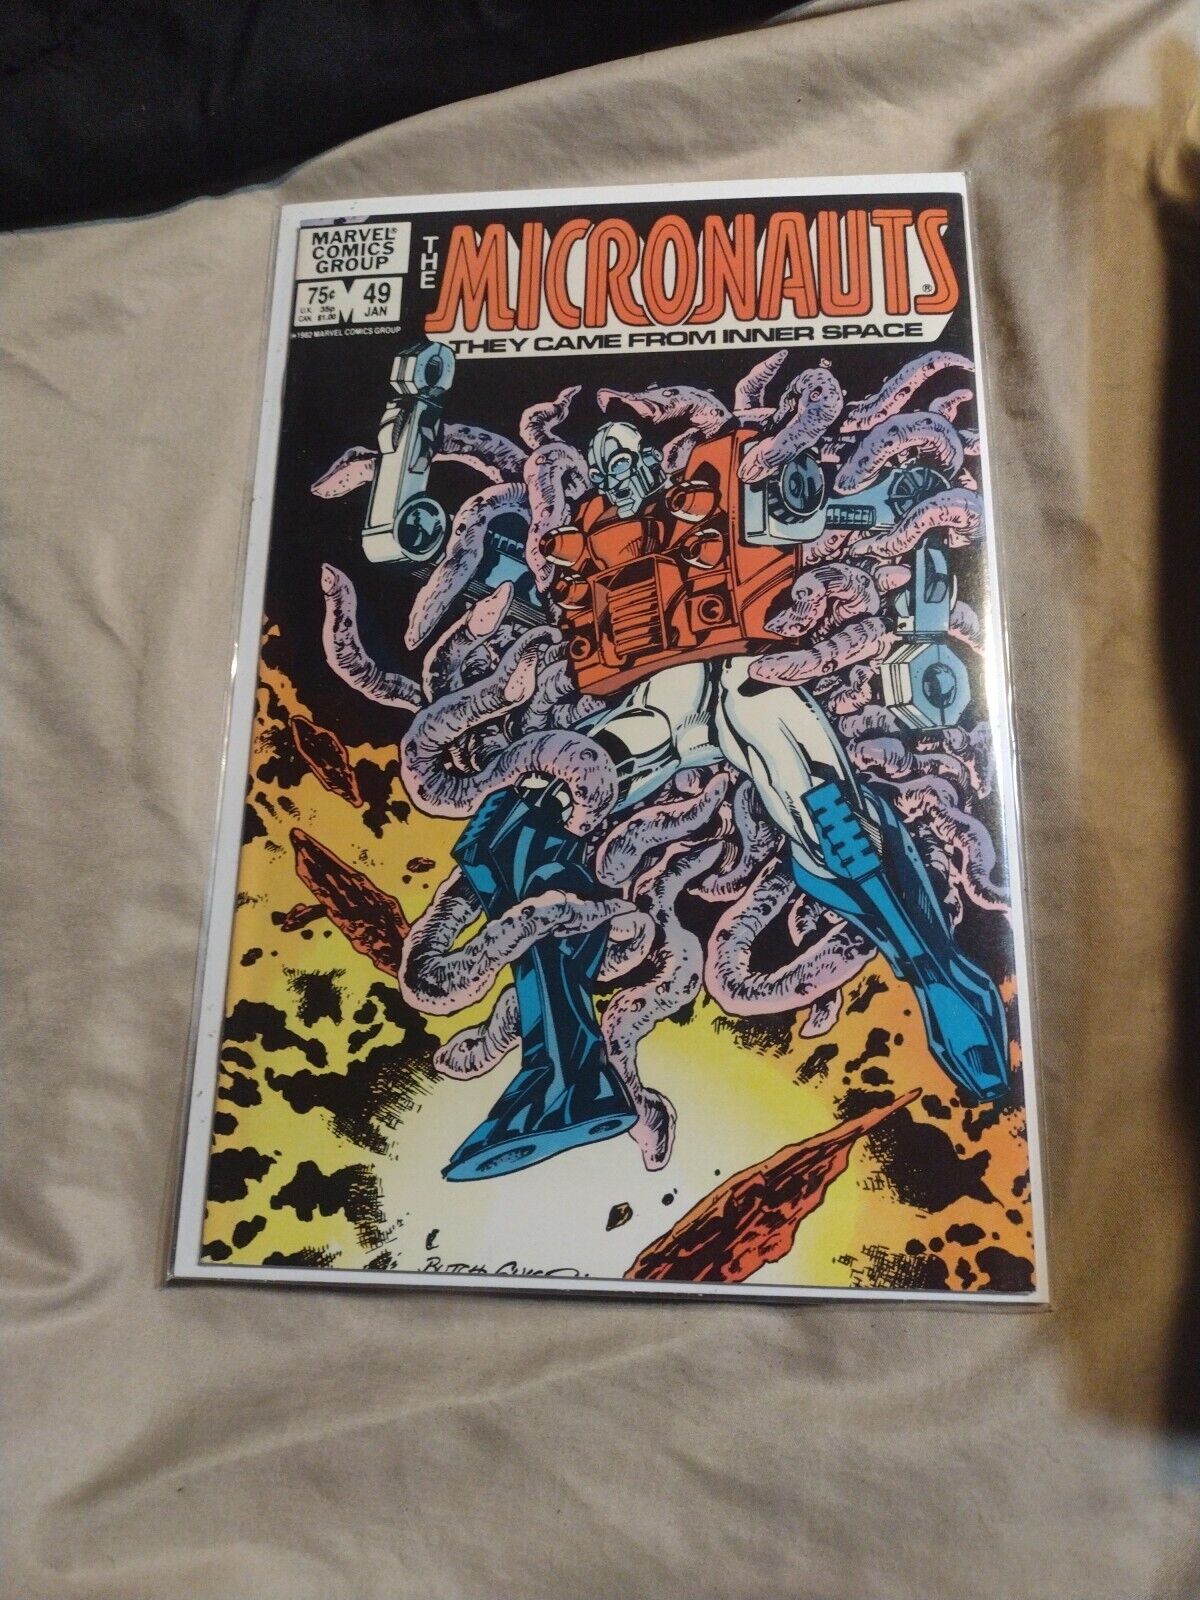 Micronauts #49, Vol. 1 (1979-1984) Marvel Comics